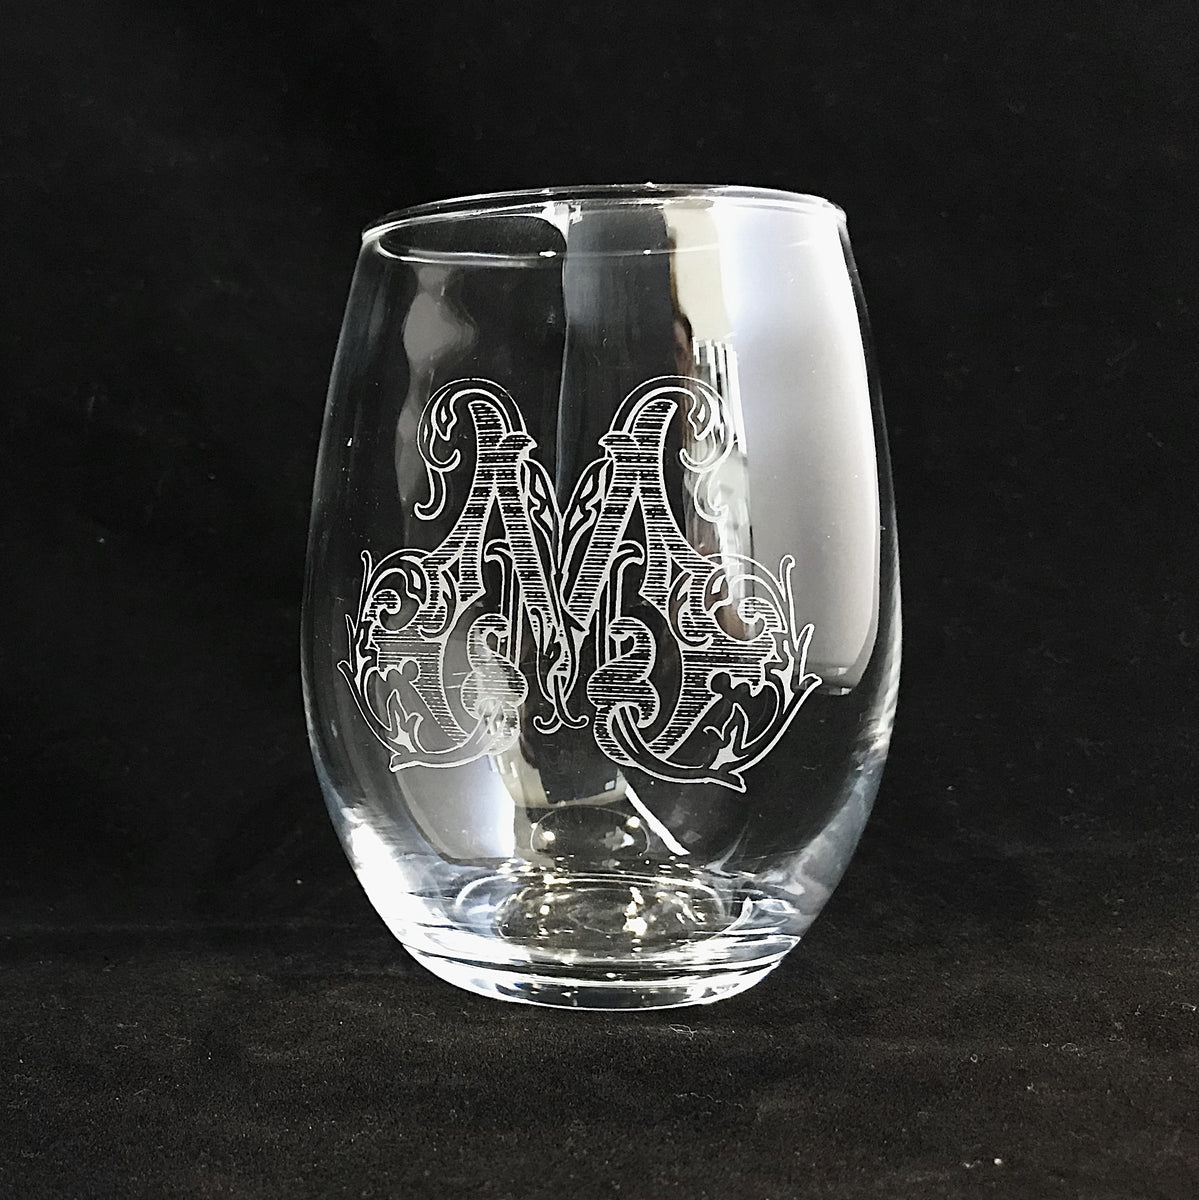 Monogrammed Wine Glass Marker Refills (#319) — Inkello Letterpress